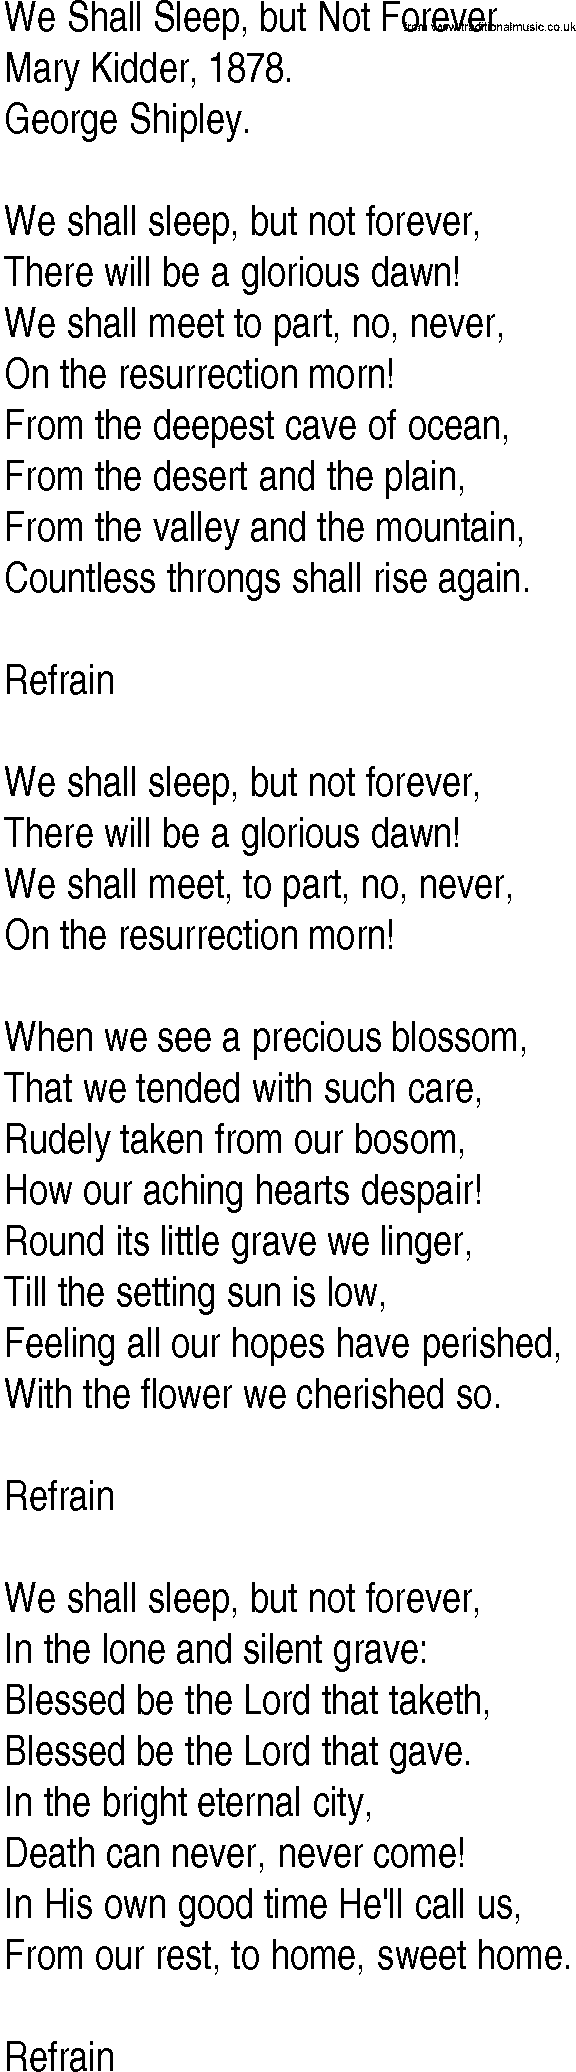 Hymn and Gospel Song: We Shall Sleep, but Not Forever by Mary Kidder lyrics